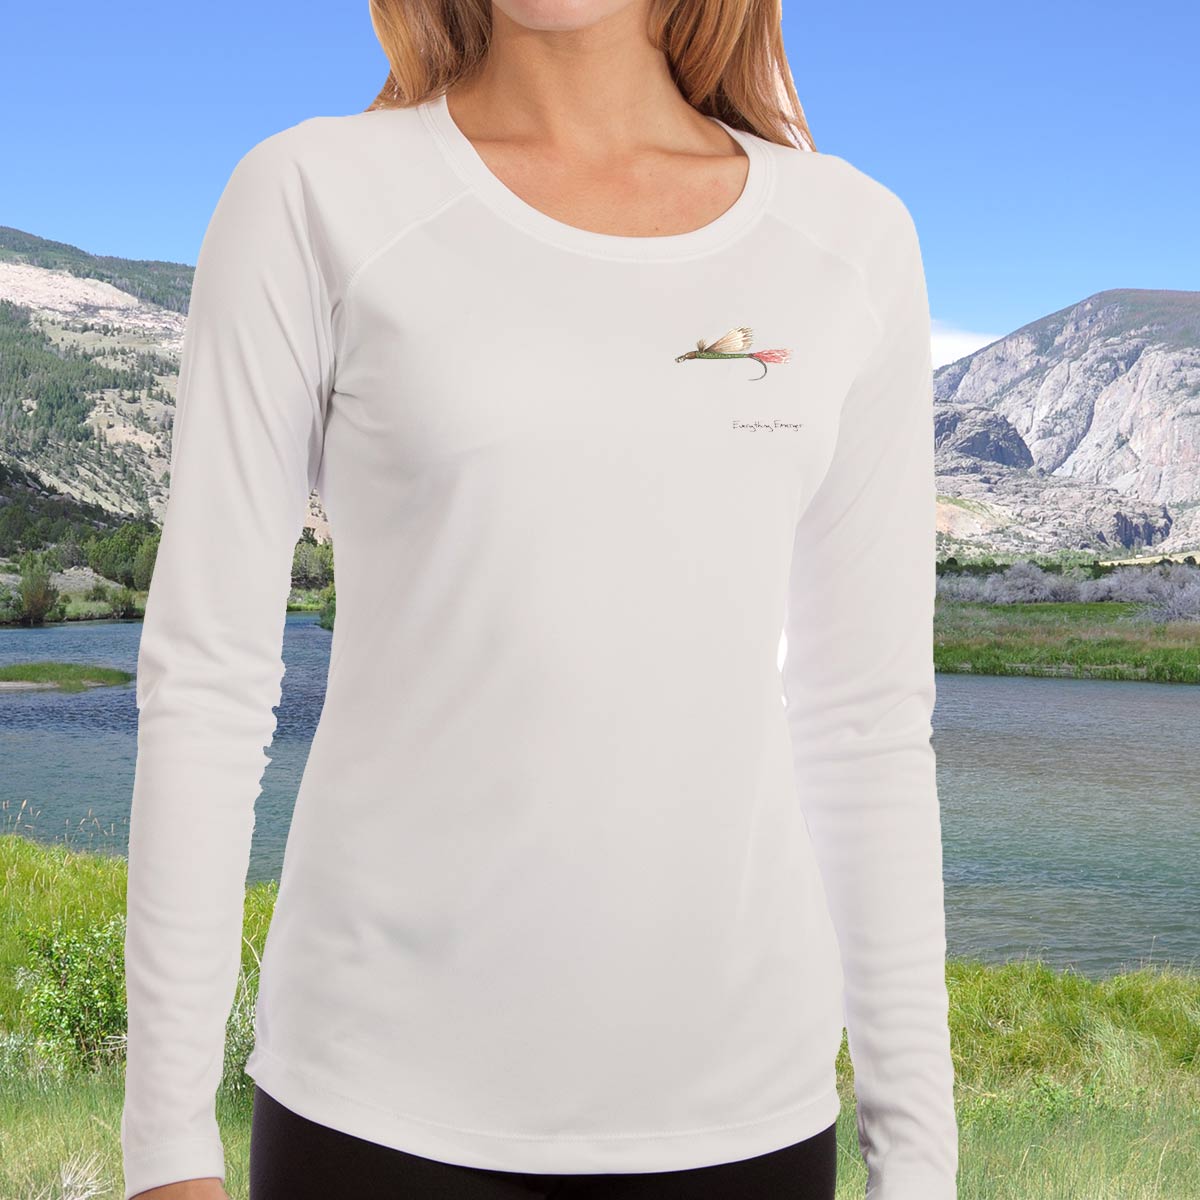 https://www.jeffcurrier.com/wp-content/uploads/2018/08/jeff-currier-ladies-long-sleeve-solar-shirt-everything-emerger-white.jpg